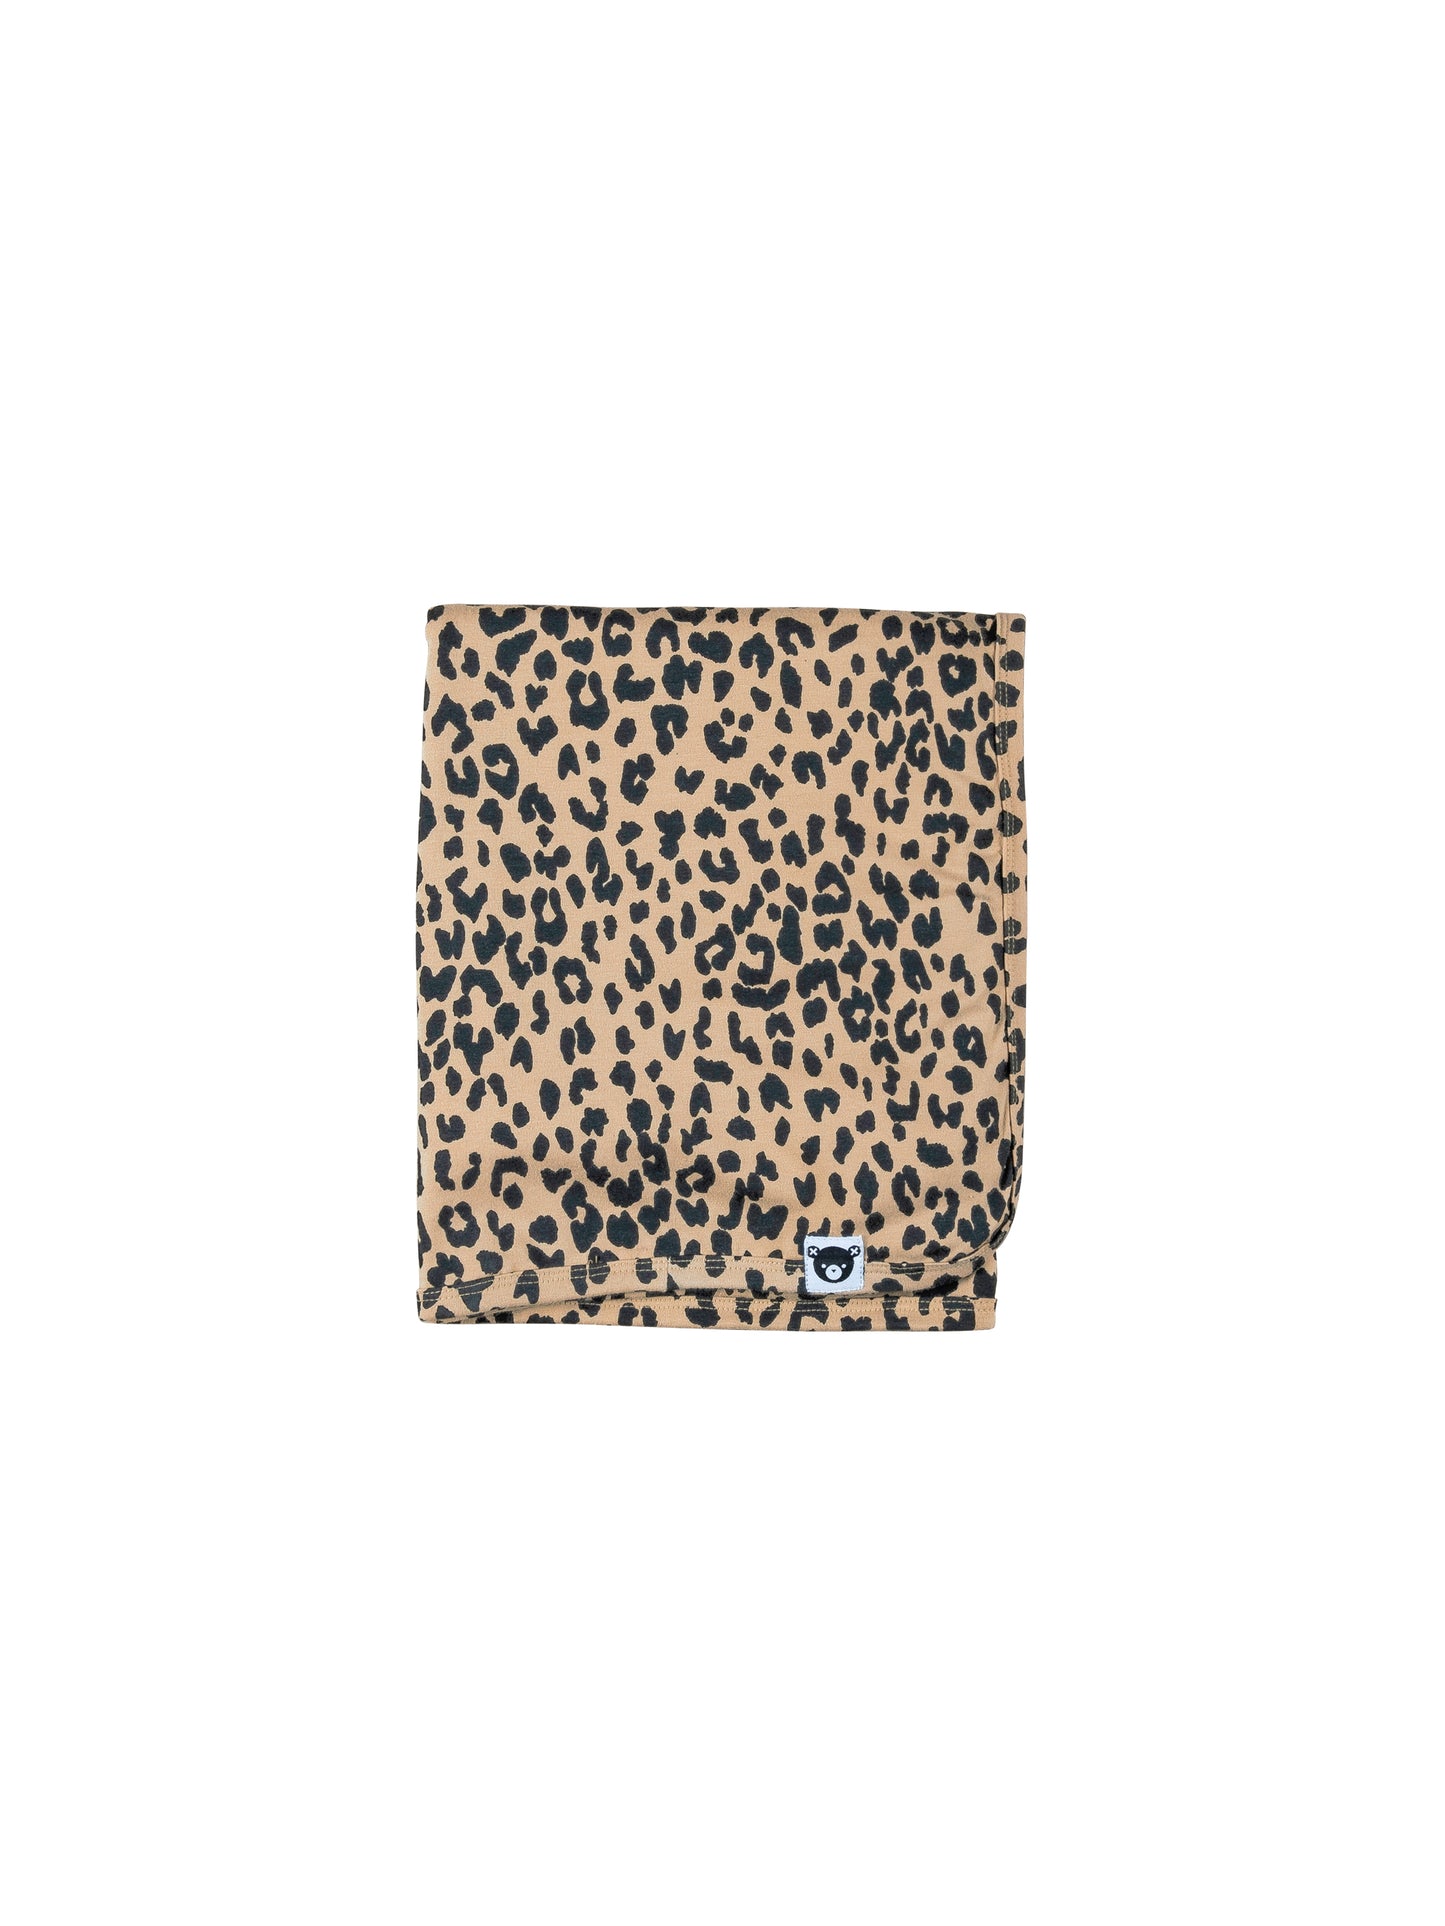 Huxbaby Leopard Blanket